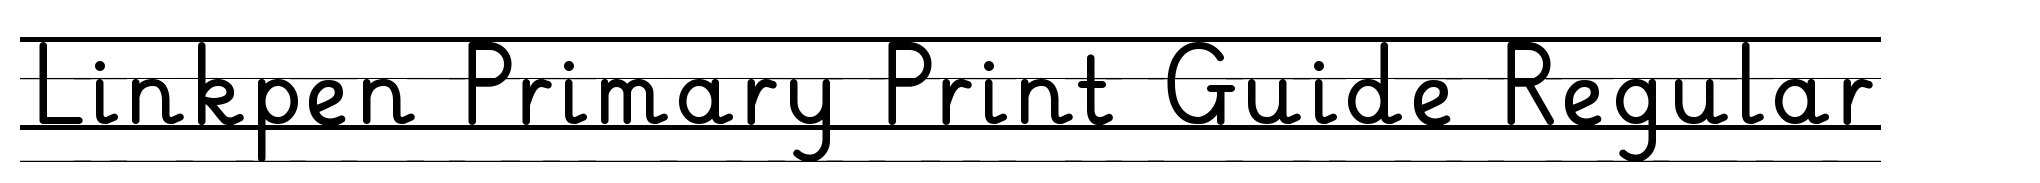 Linkpen Primary Print Guide Regular image